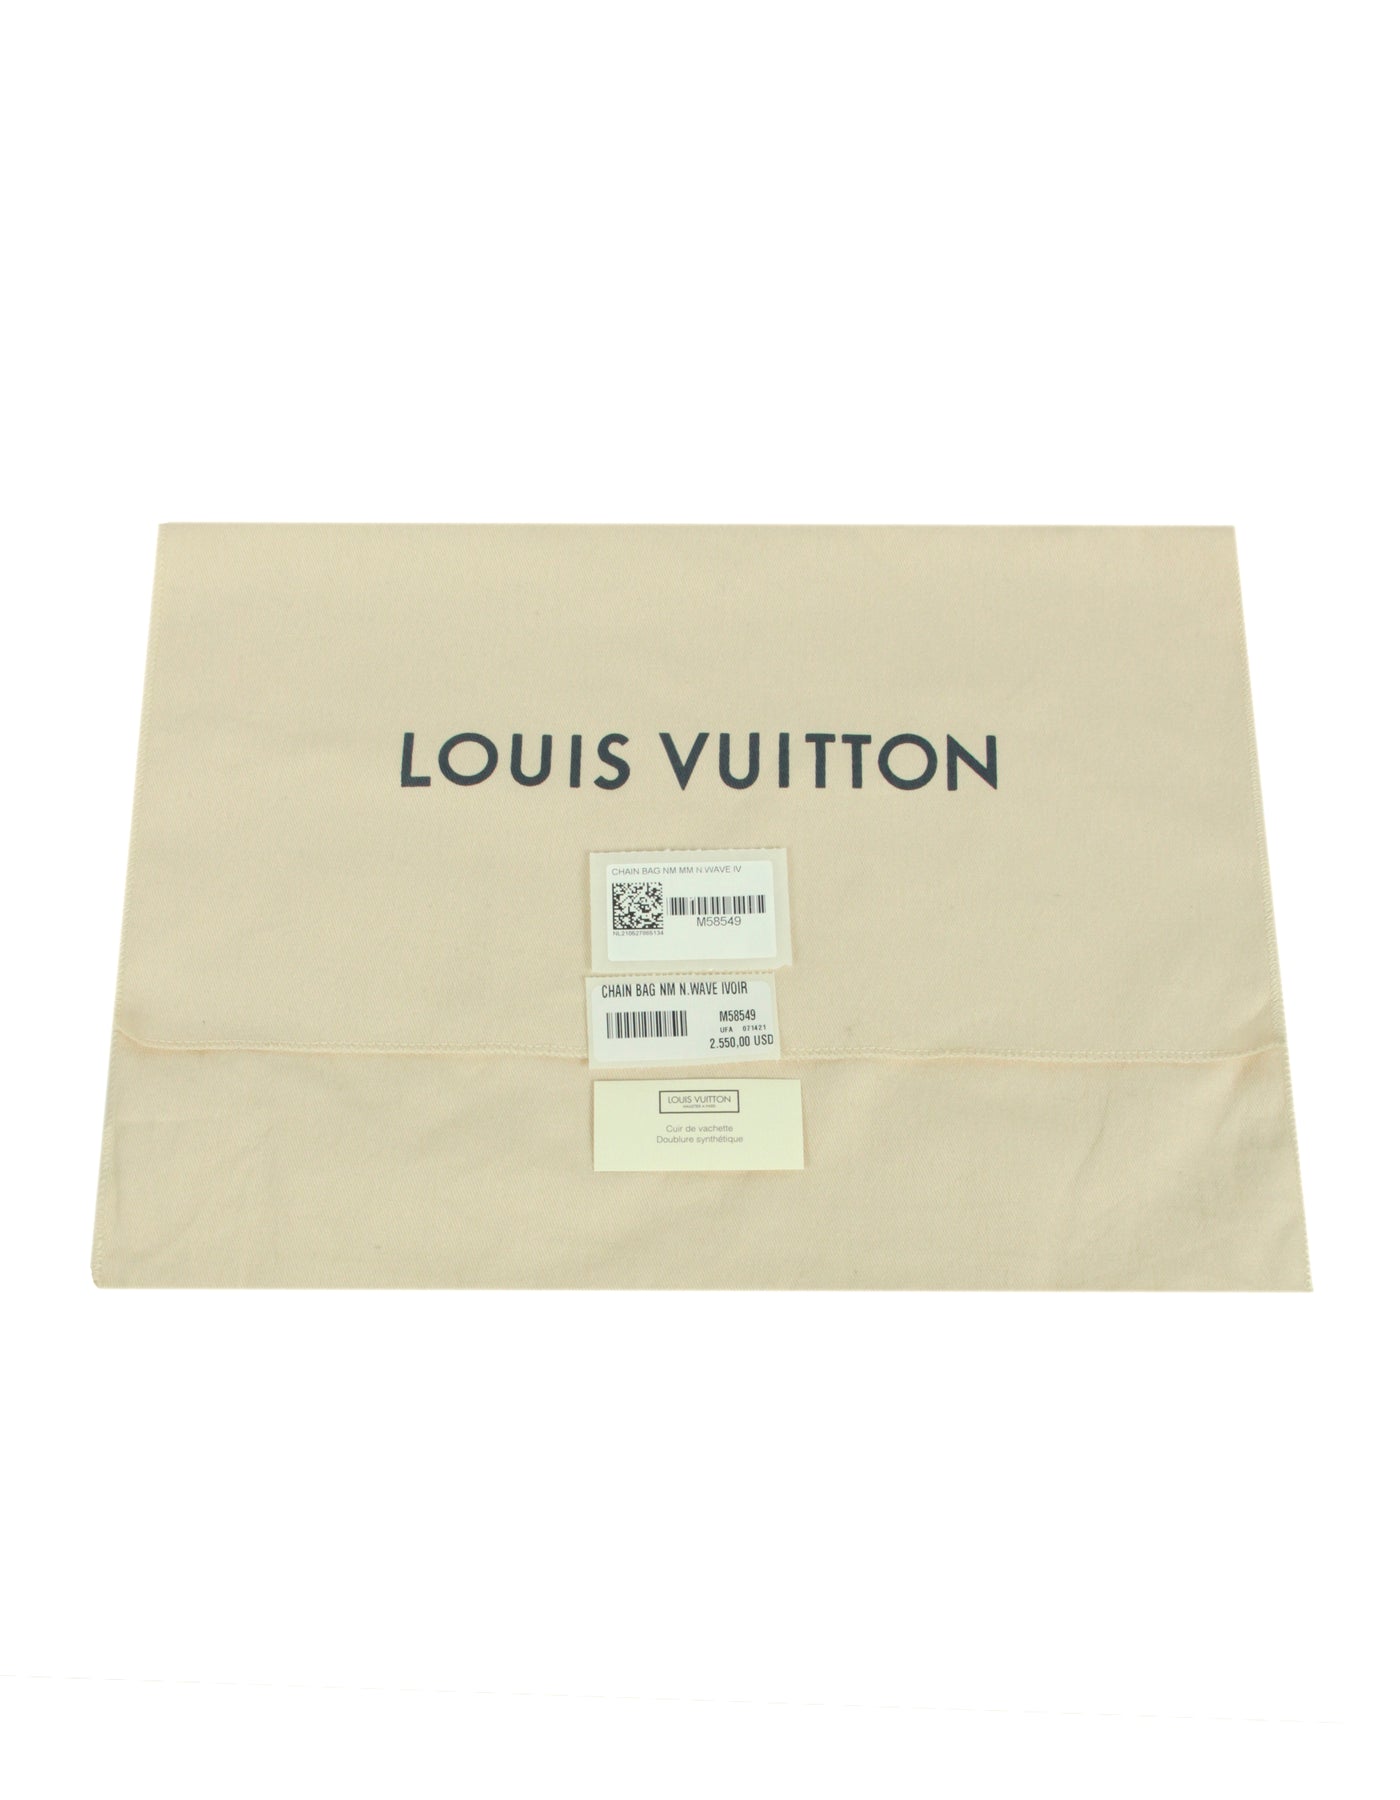 LOUIS VUITTON Calfskin LV New Wave Chain Bag Ivory 861694